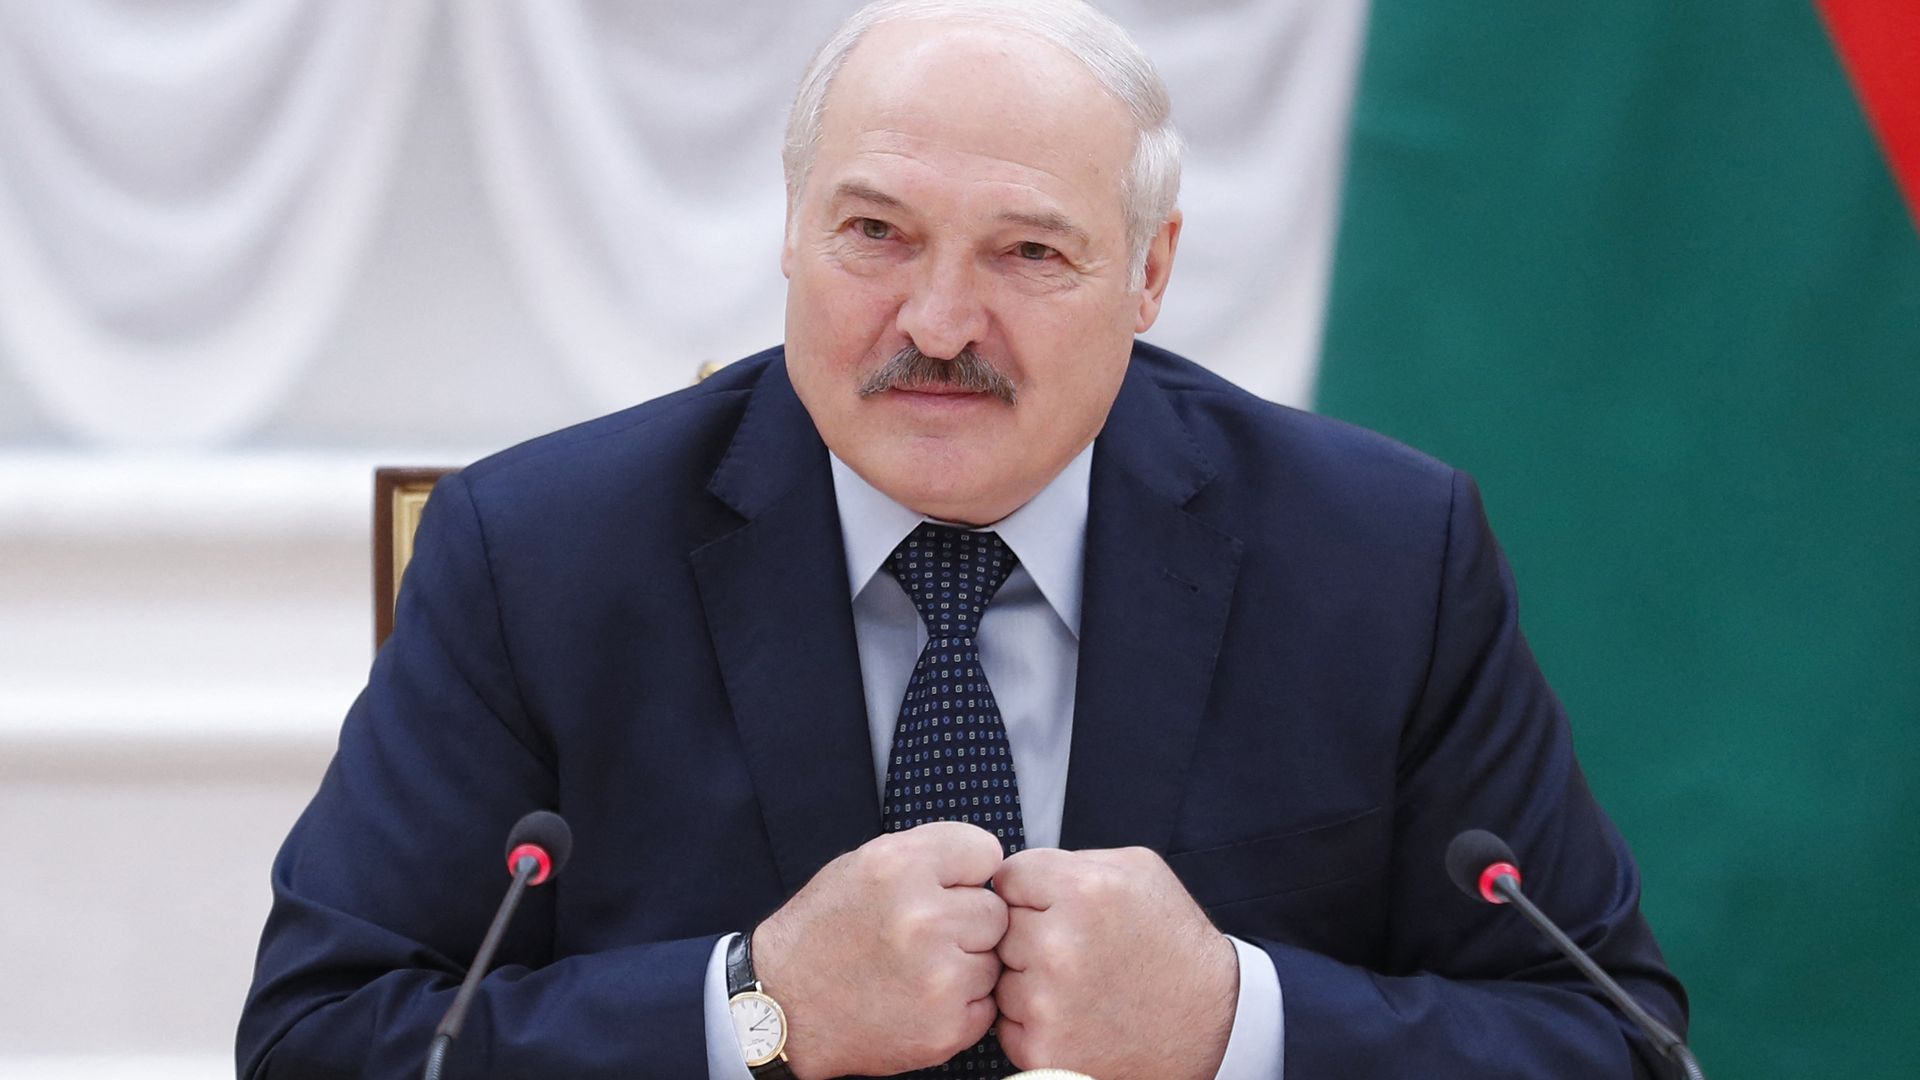 Belarusian President Alexander Lukashenko during a meeting in Minsk in May 2021.